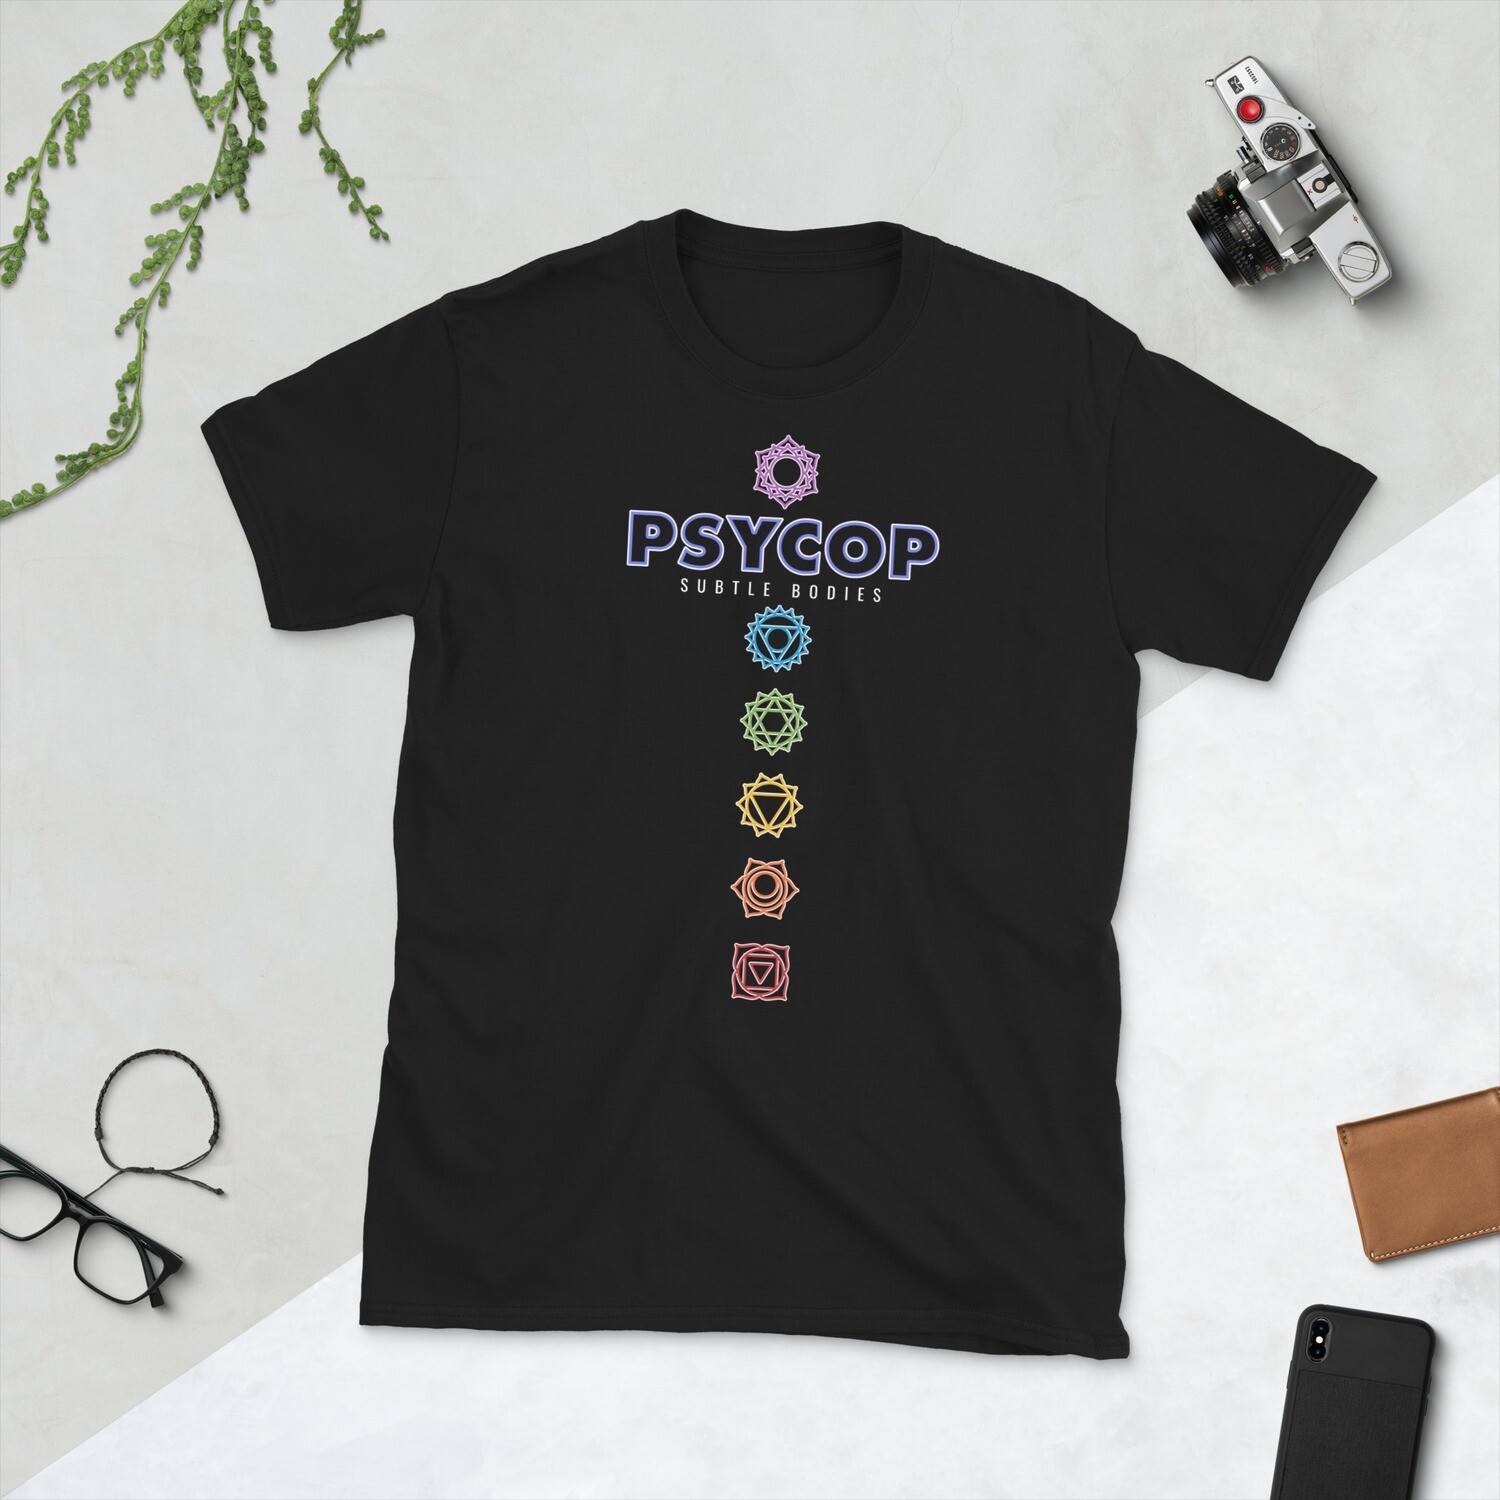 PsyCop Subtle Bodies Lightweight Unisex T-Shirt